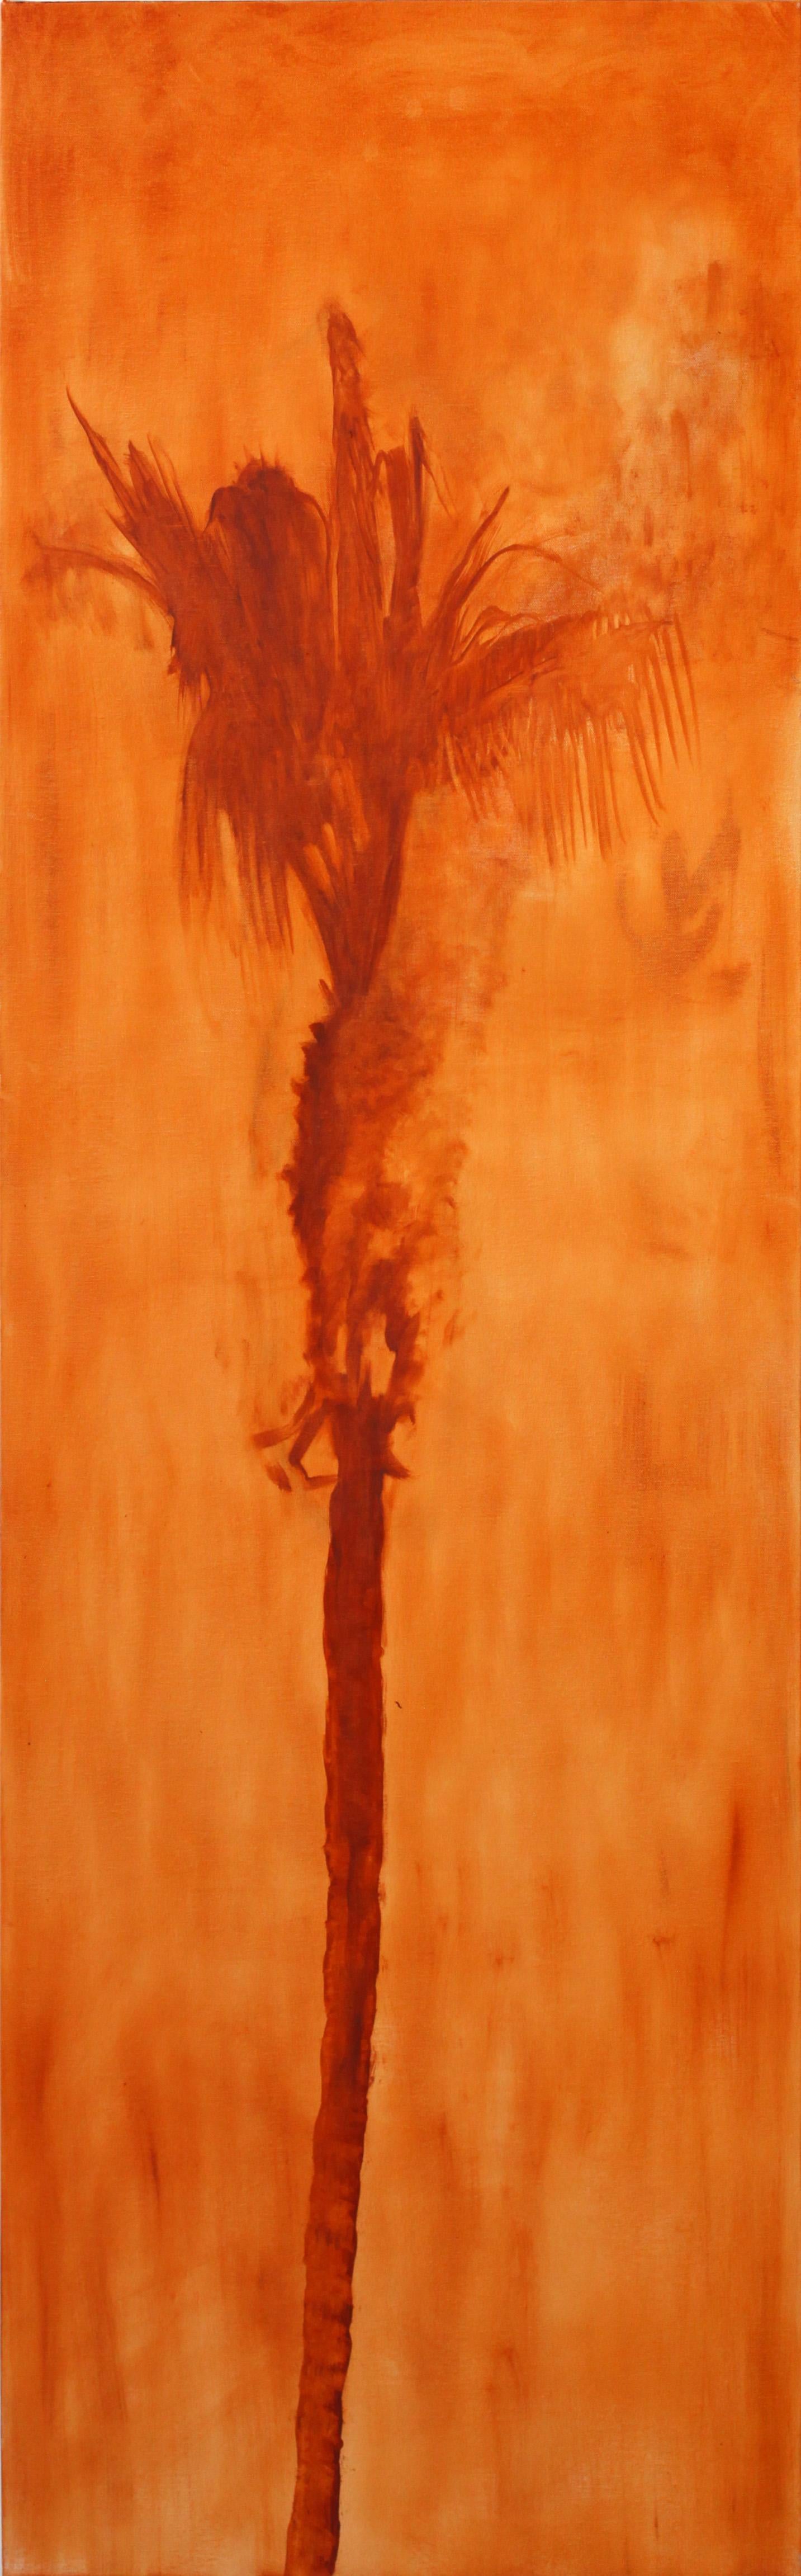 Perry Vàsquez Landscape Painting - Conceptual Realistic Oil Painting, "Inferno 2"